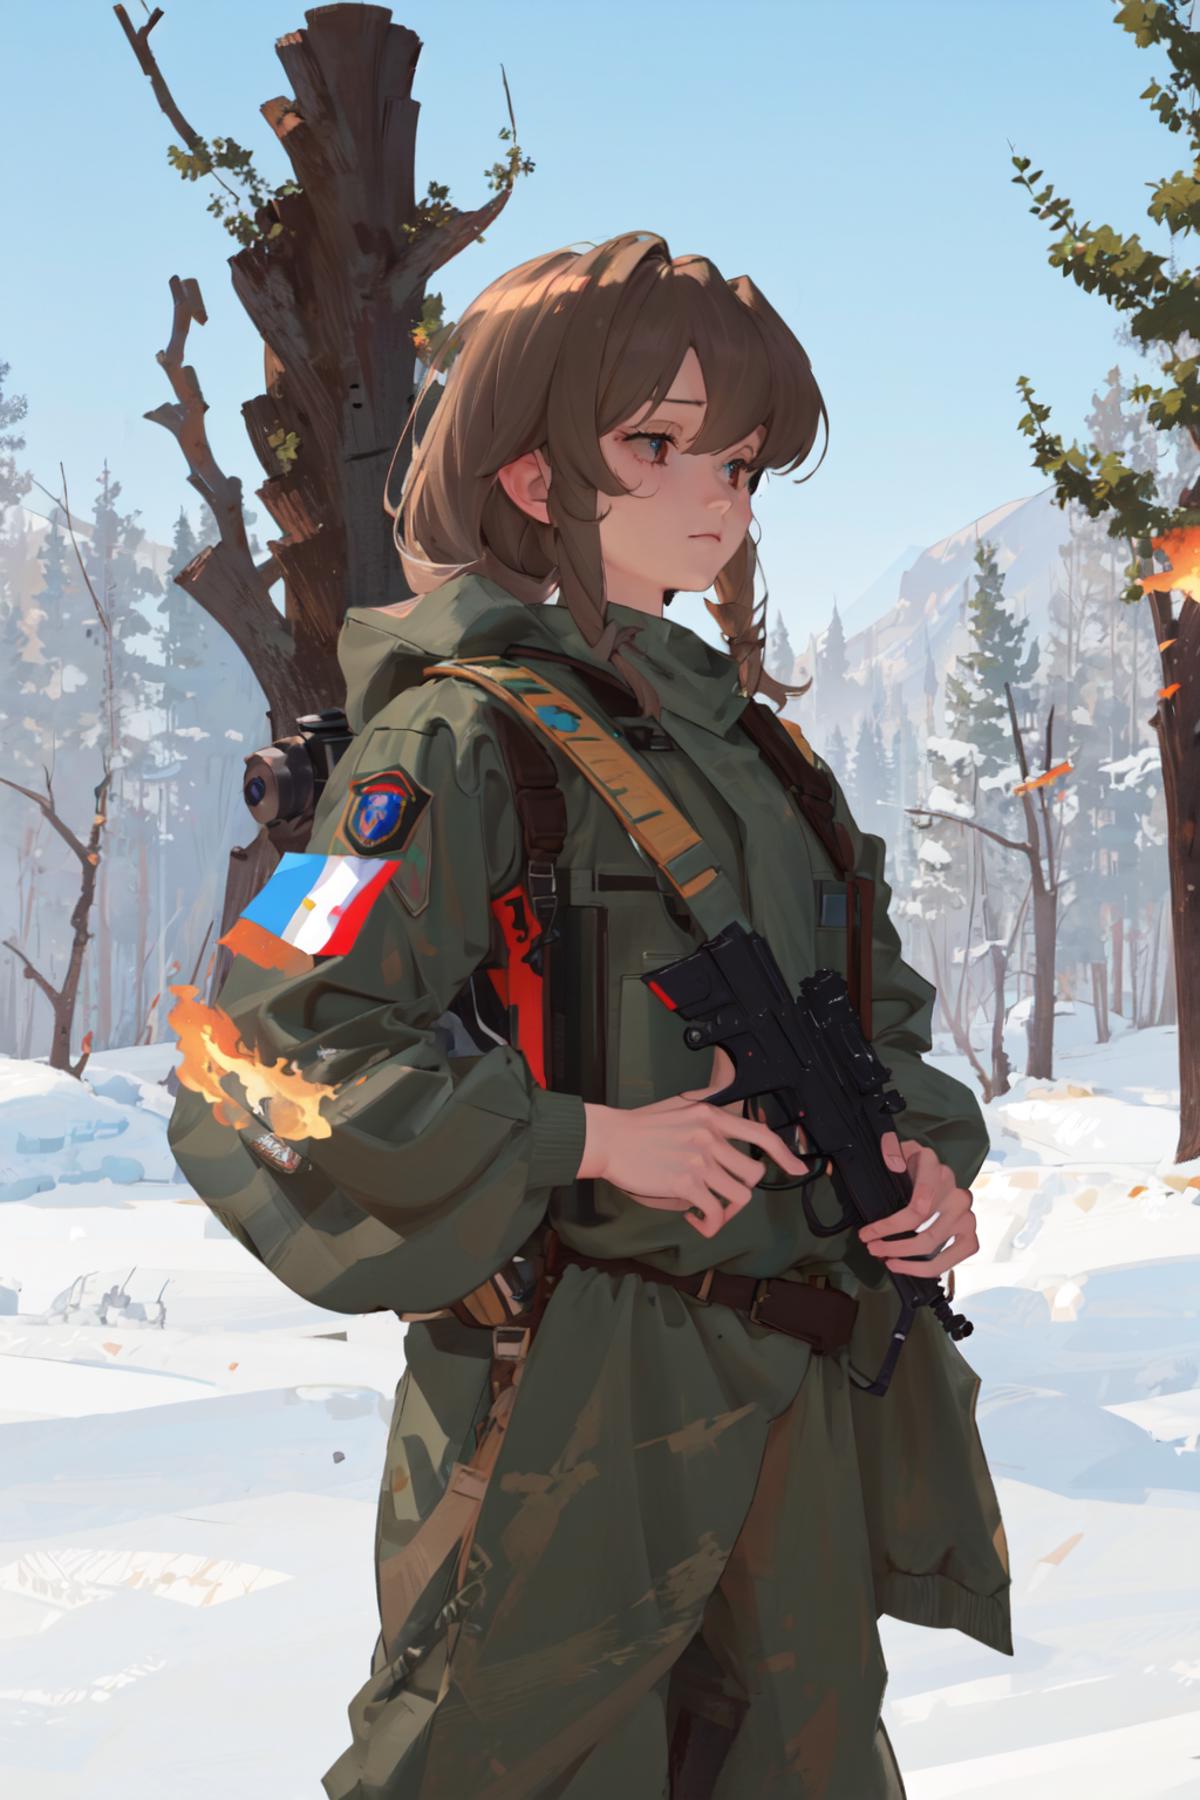 Military Russian Waifu image by cumetani